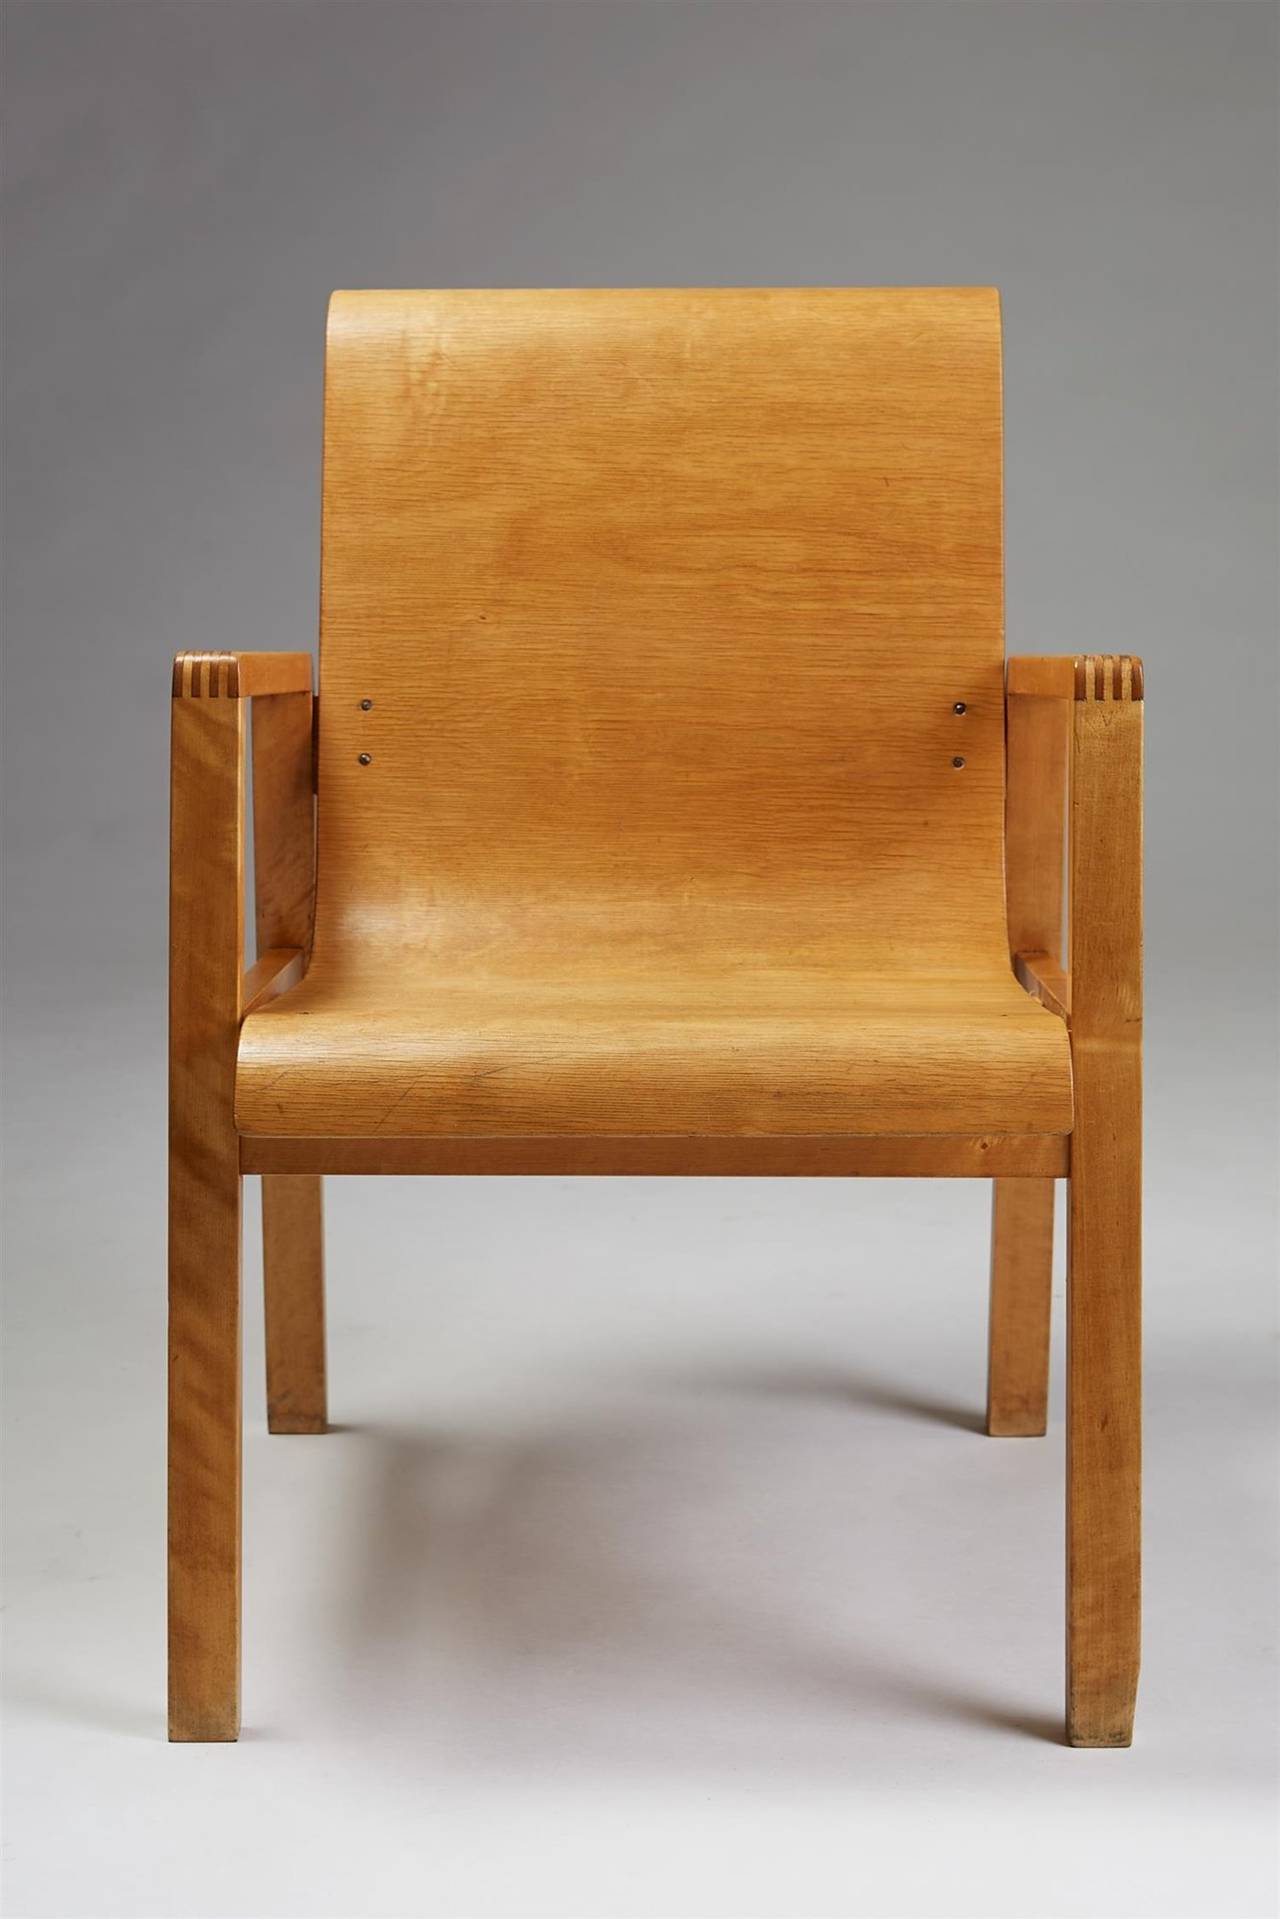 Scandinavian Modern Chair Designed by Alvar Aalto for Artek, Finland, 1950s